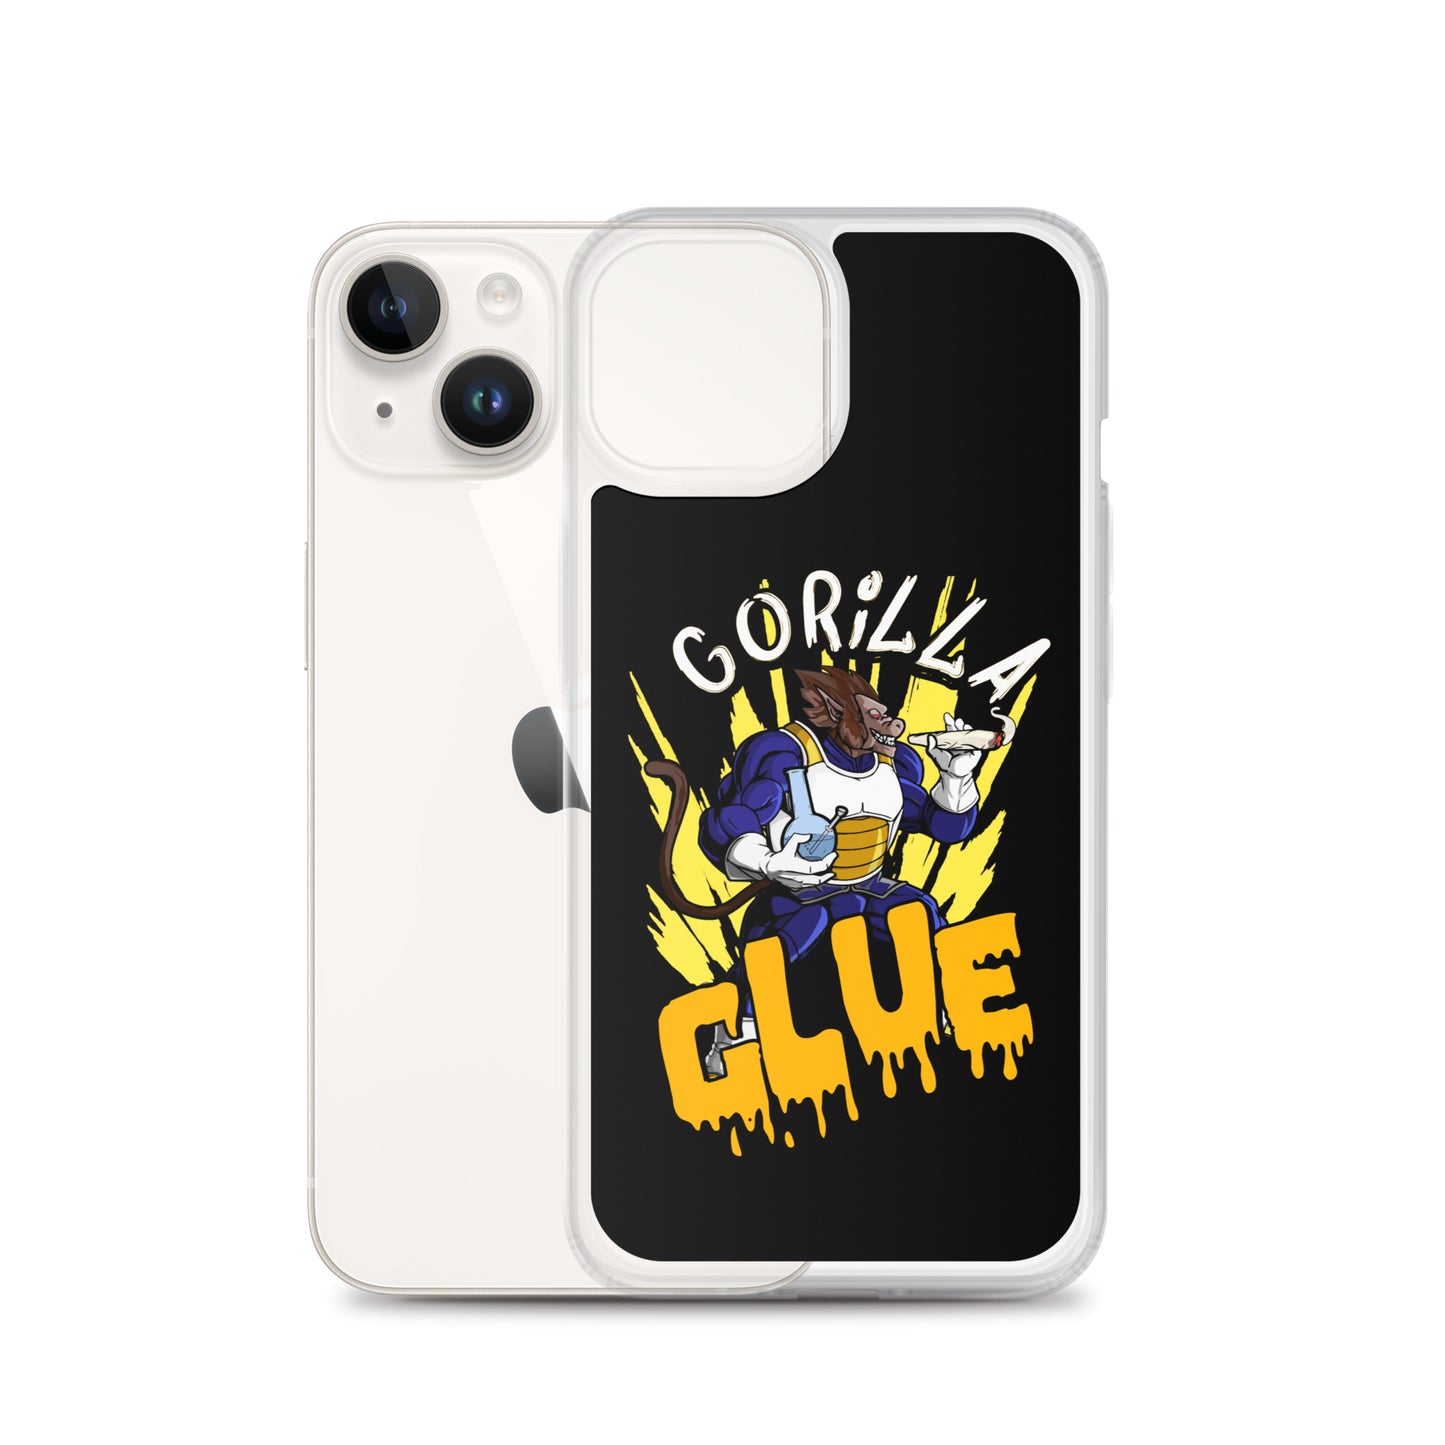 "Gorilla Glue DBZ" iPhone case